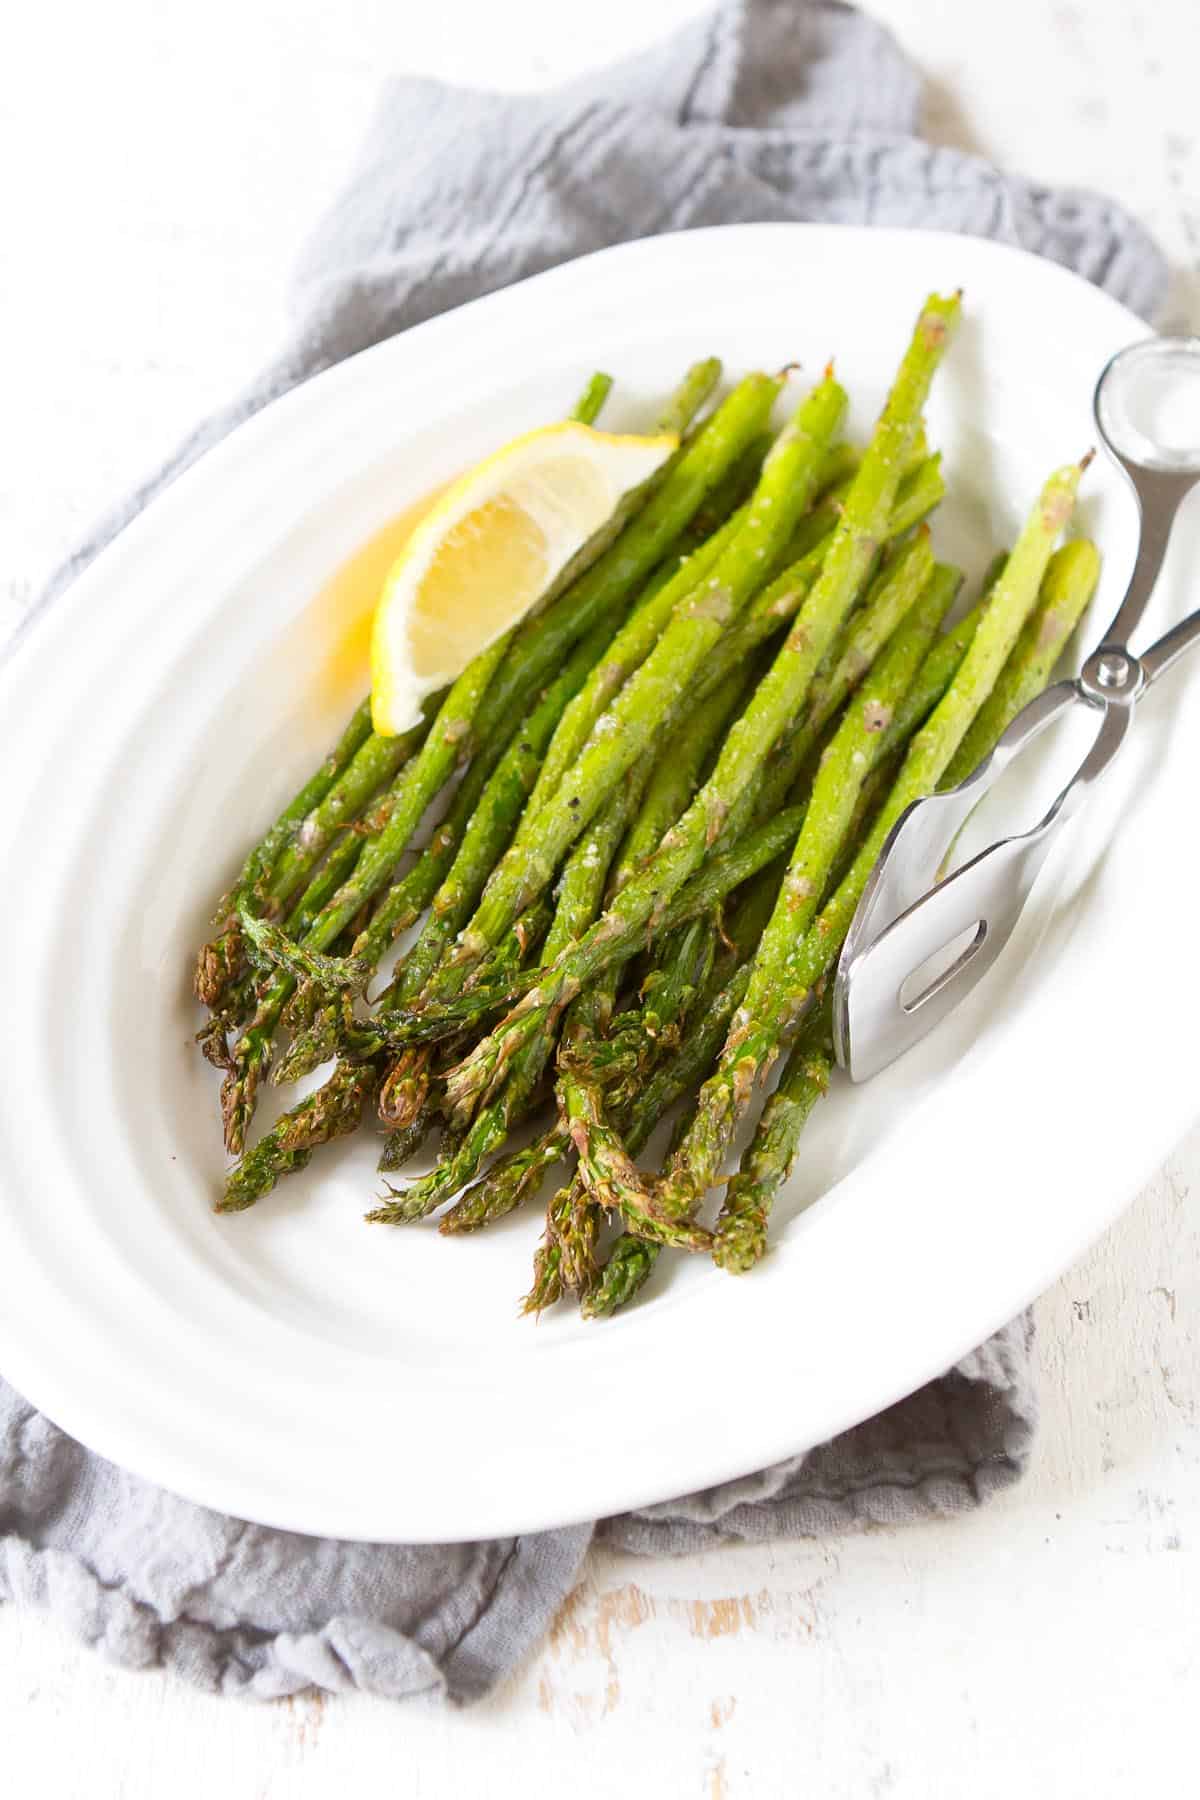 Air fryer asparagus and a lemon wedge on a white plate.